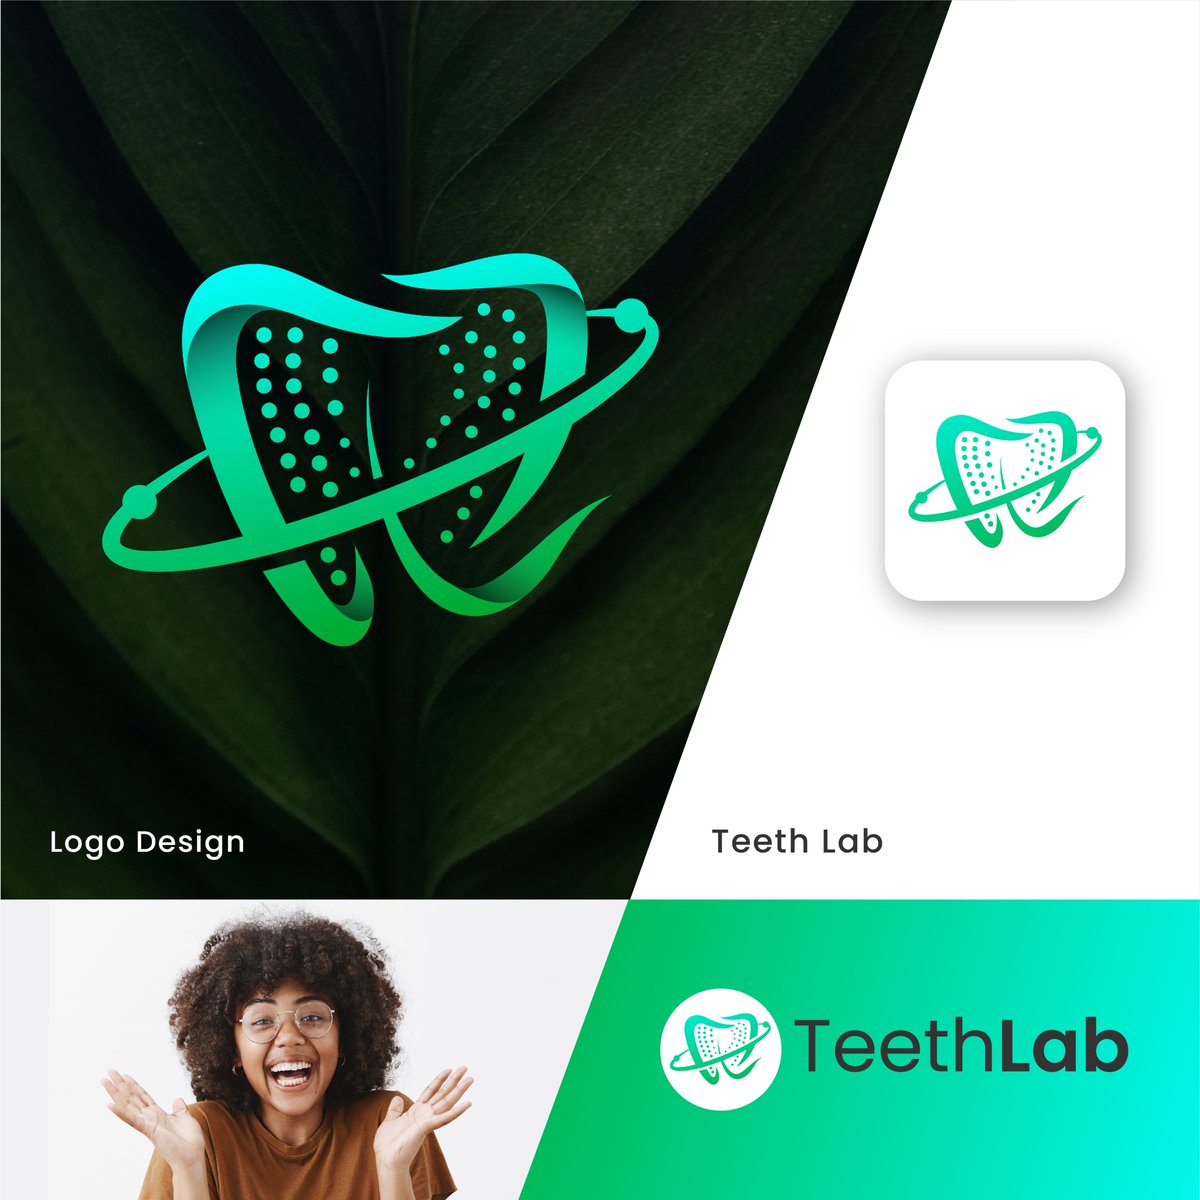 Teeth logo #logodesign #freelancer